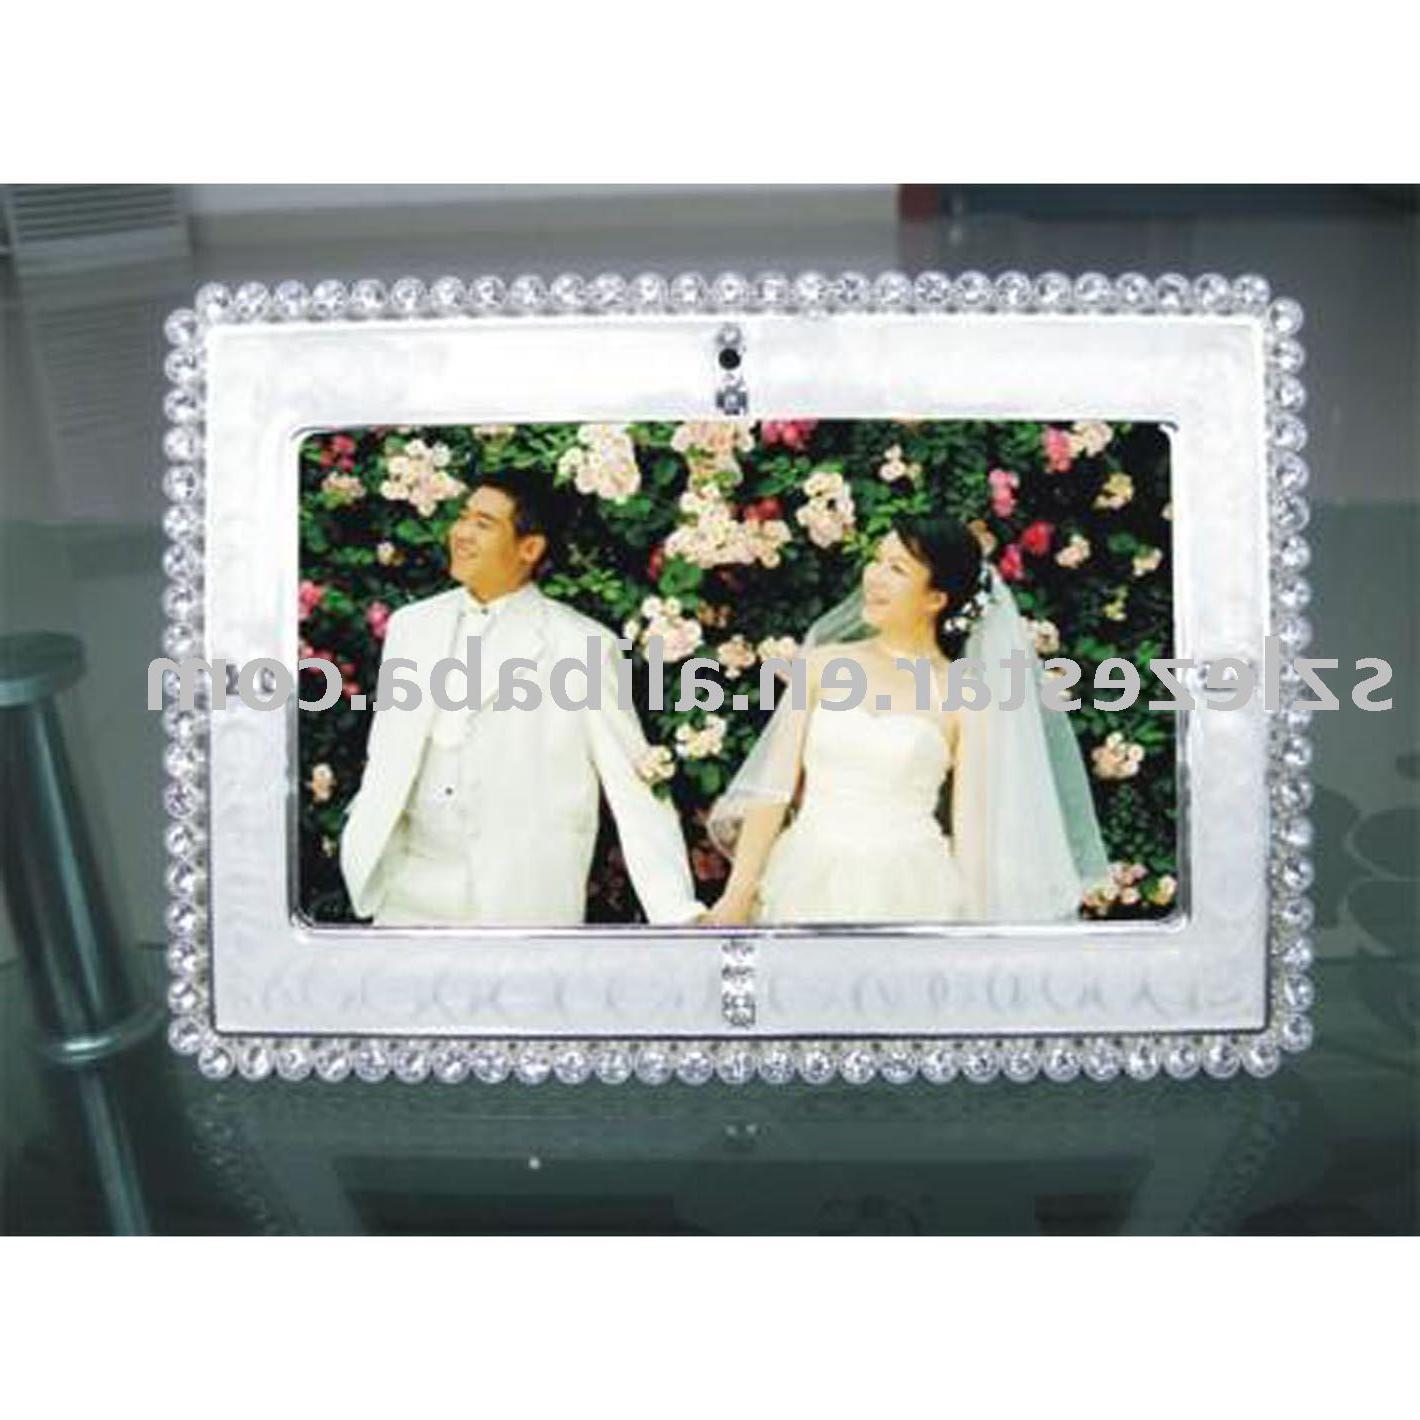 Sell wedding digital frame